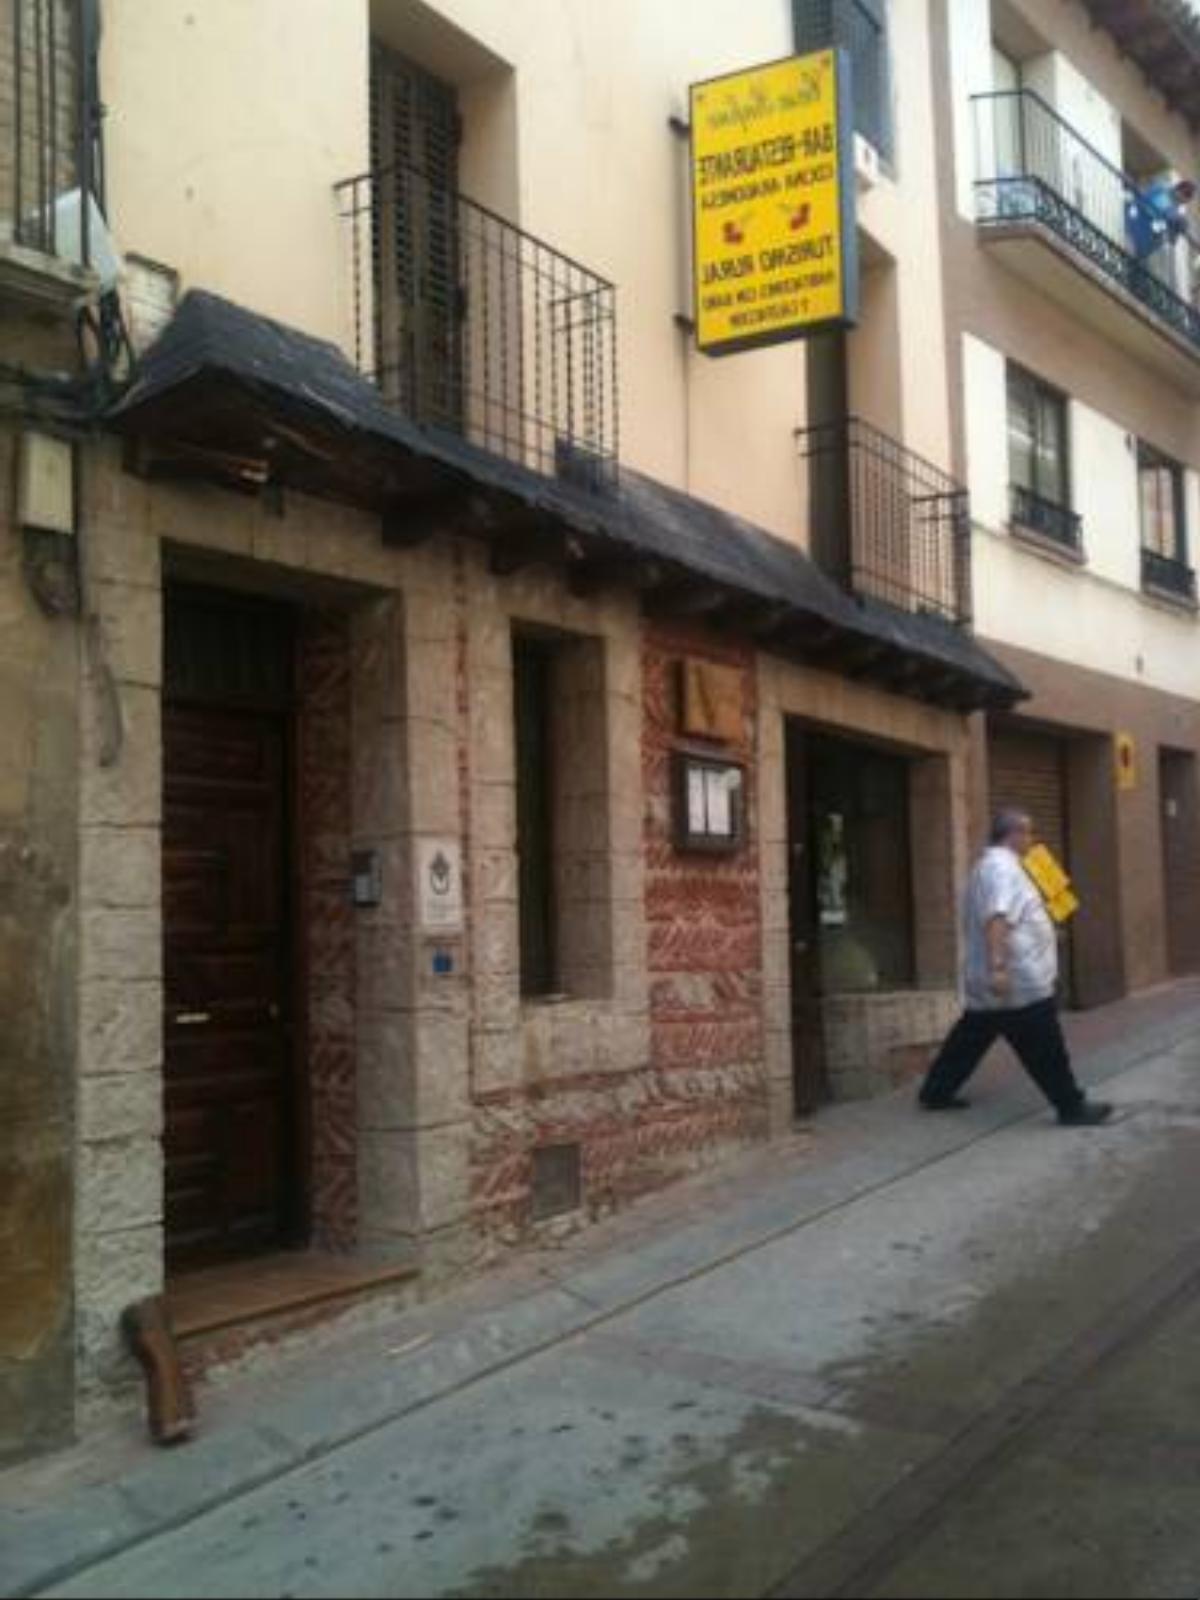 Casa Rufino Hotel Bolea Spain